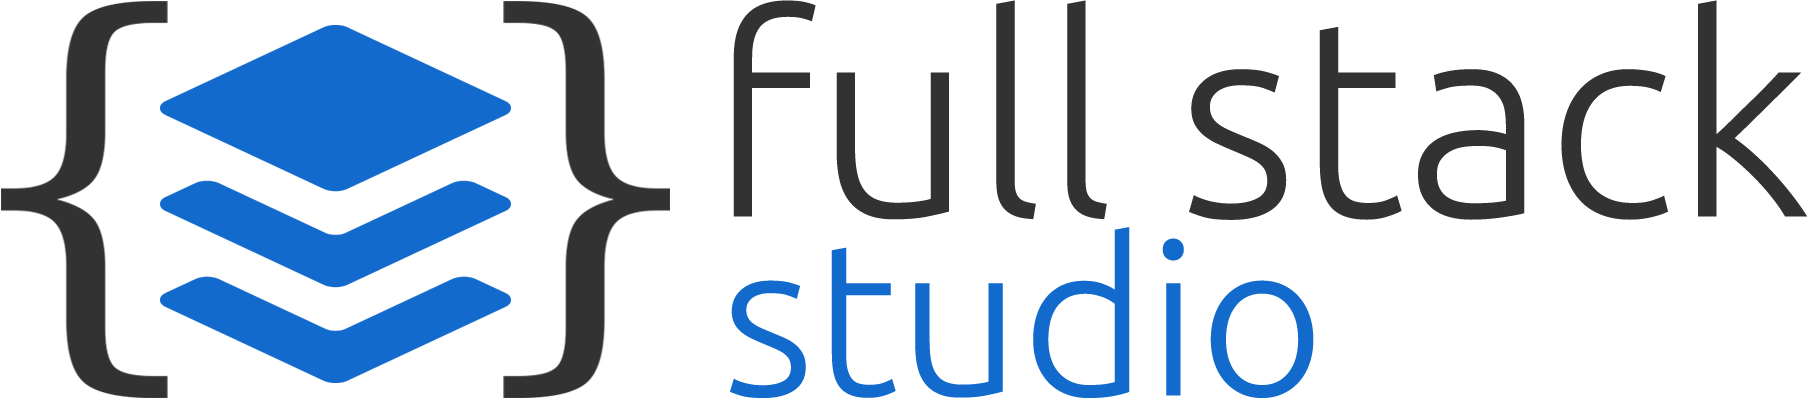 Full Stack Studio